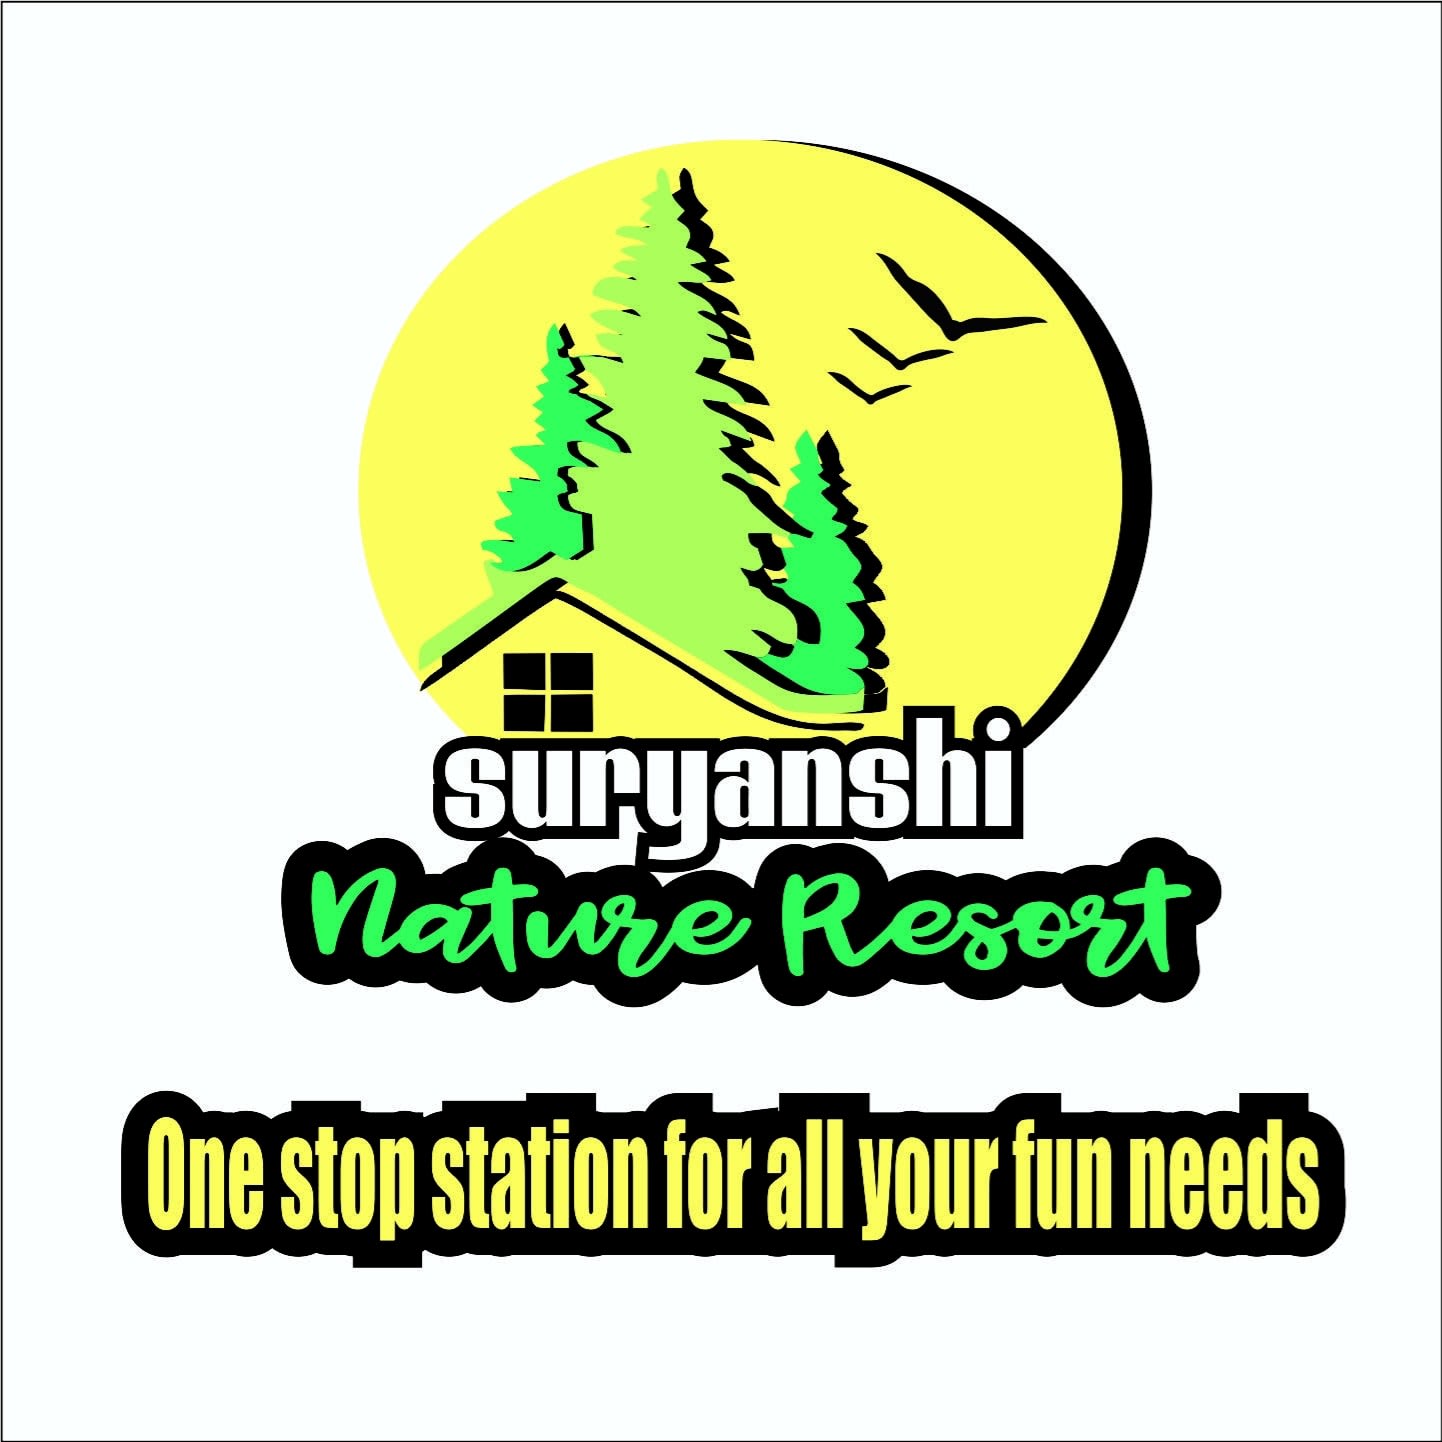 Suryanshi Nature Resort